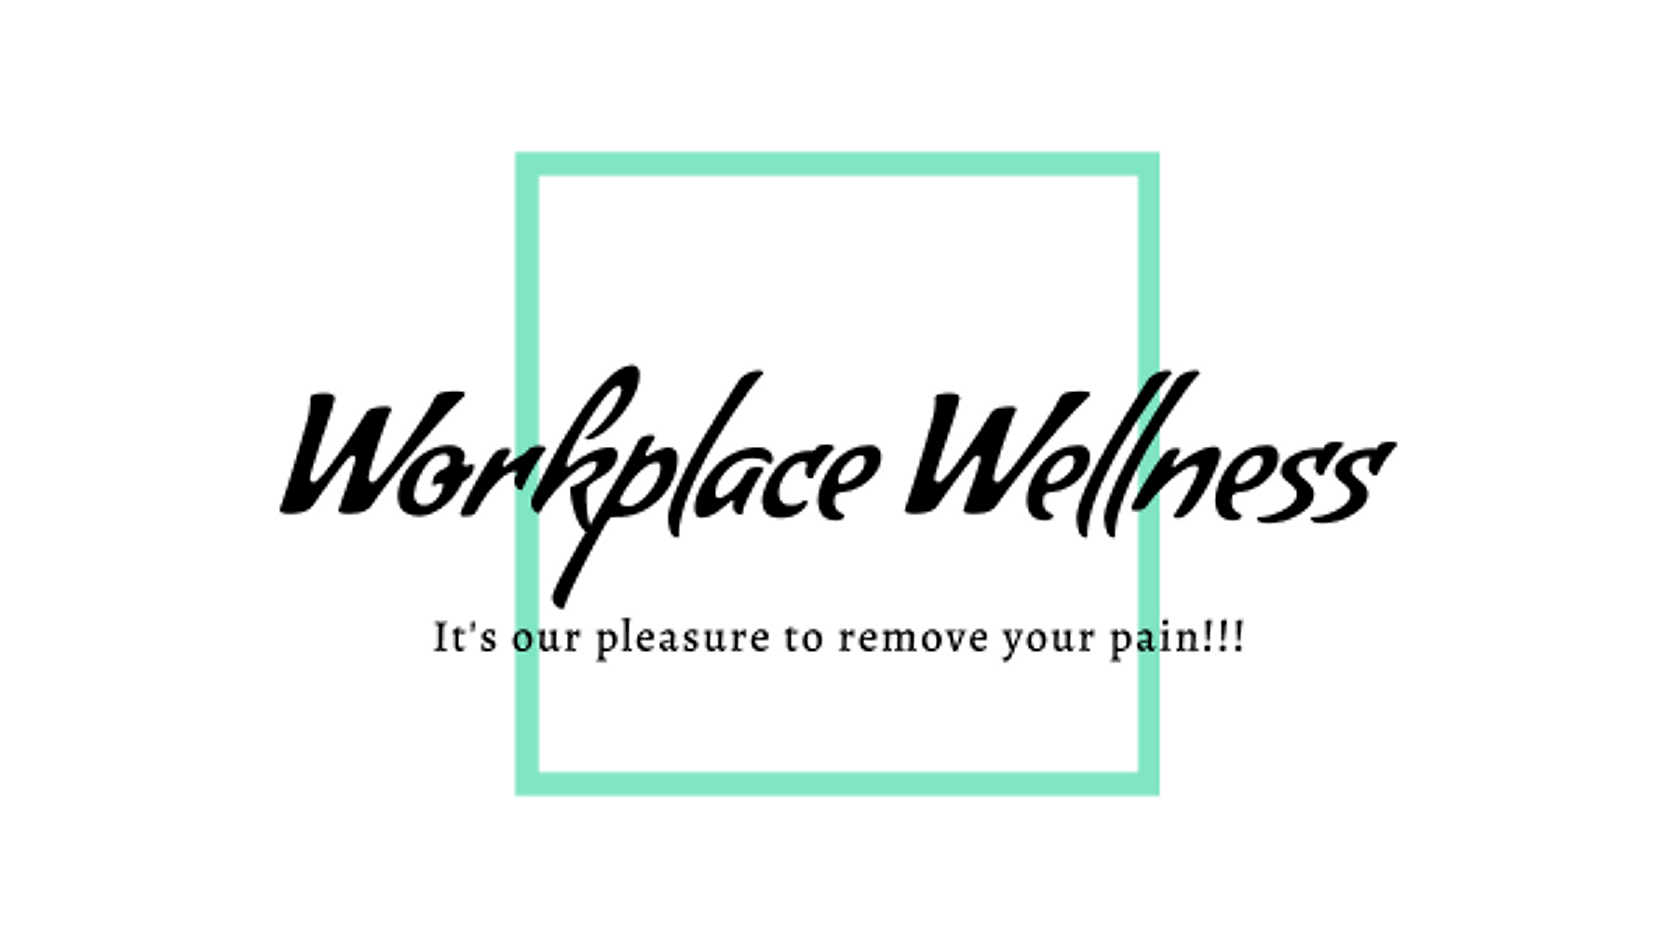 Workplace Wellness Daily